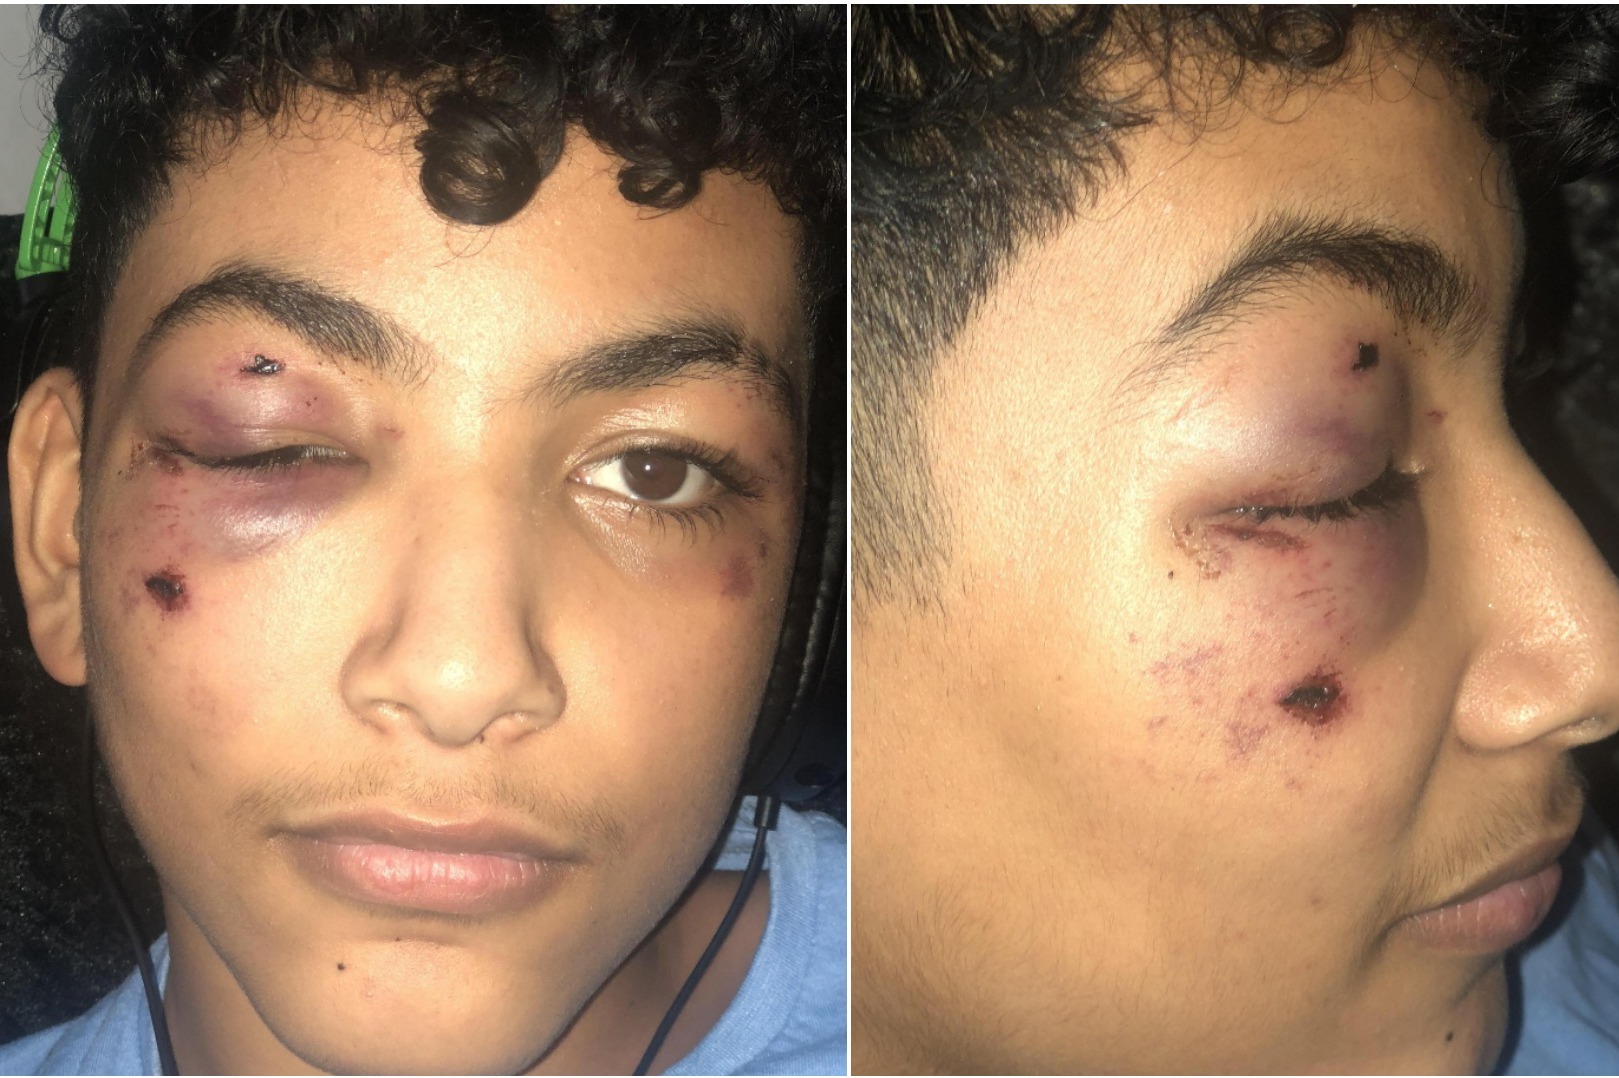 Schoolboy beaten up after posting 'joke' on Snapchat